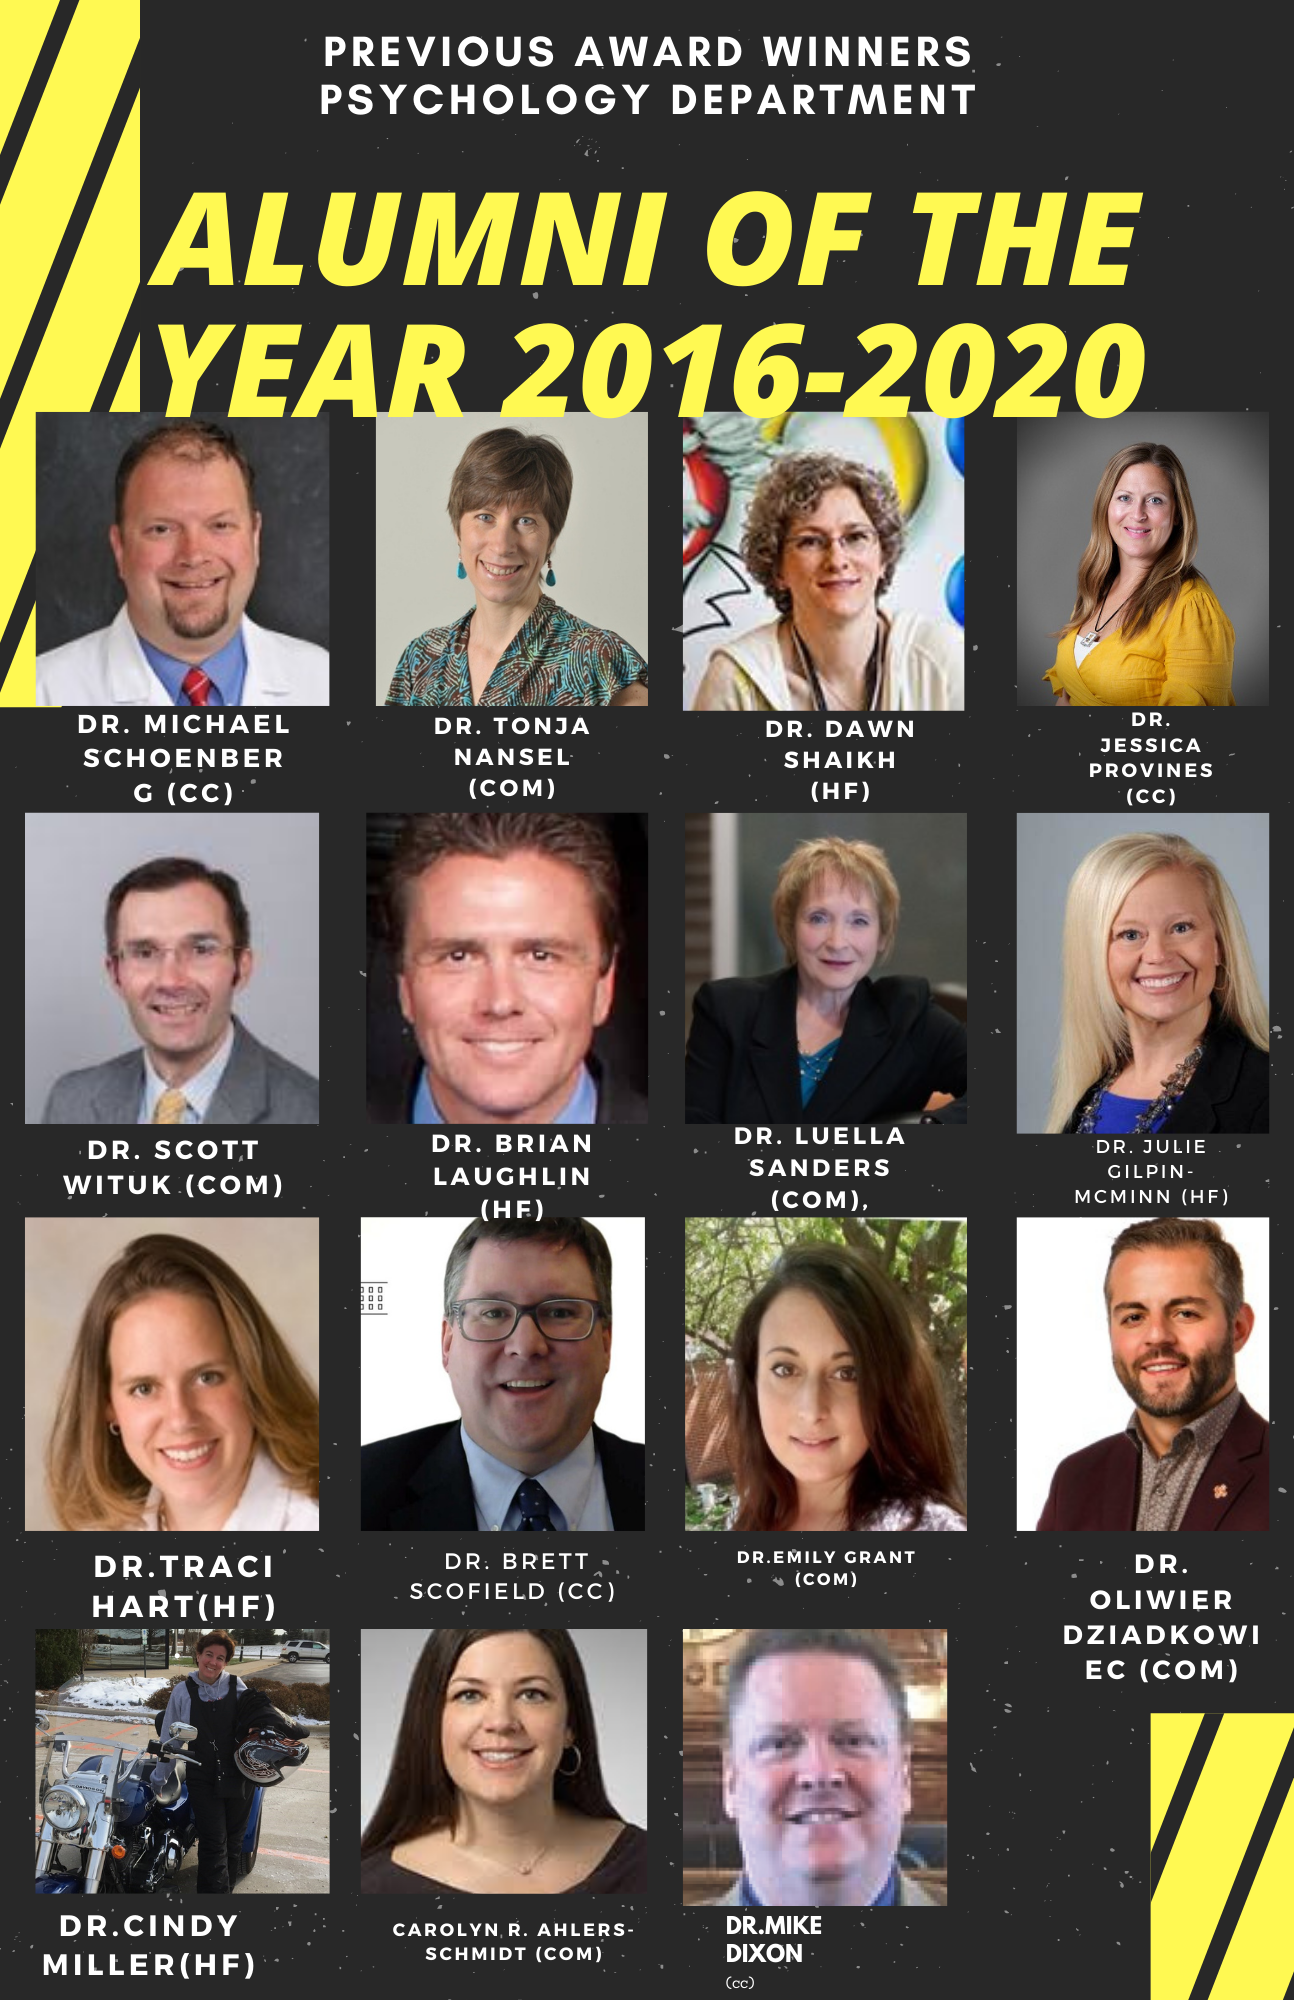 Psychology alumni award winners from 2016 to 2020